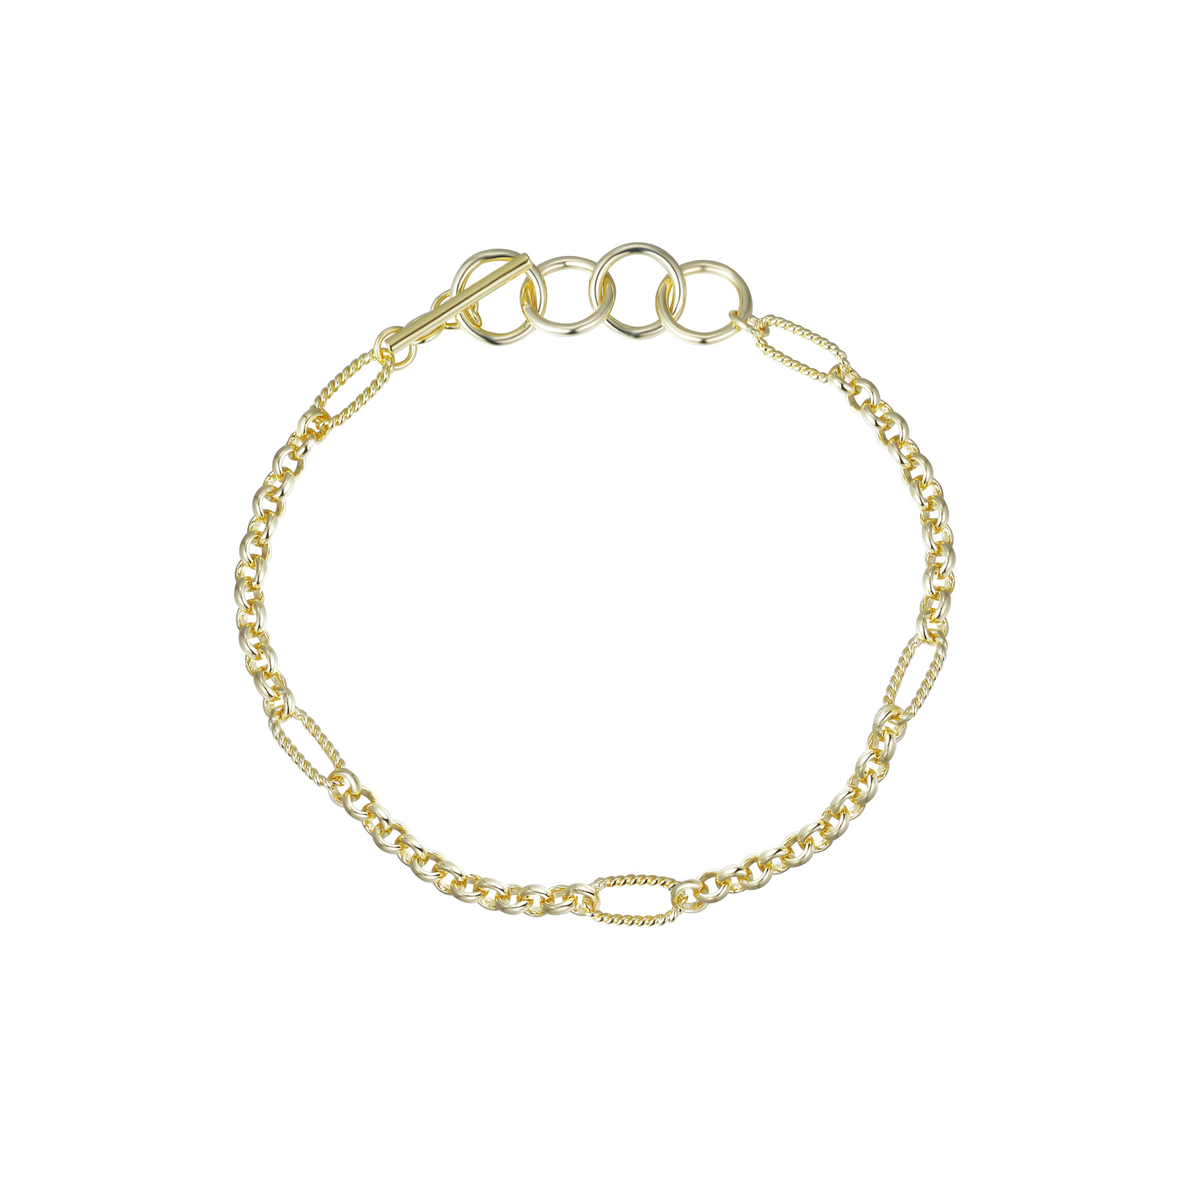 natalie wood designs eclipse gold chain bracelet